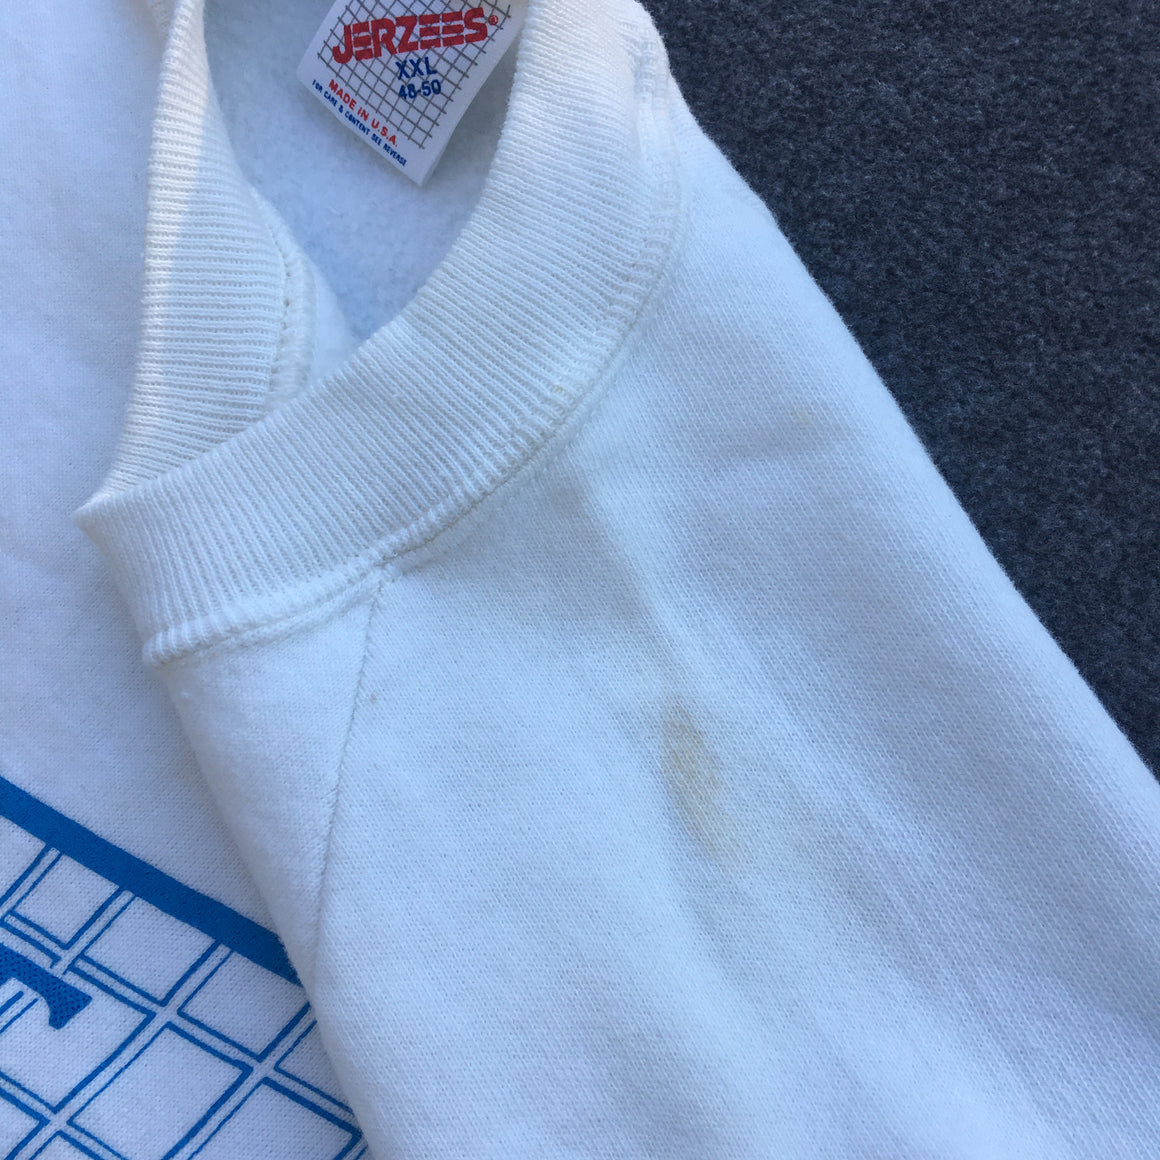 Hershey Impact soccer sweatshirt -- XL / 2XL